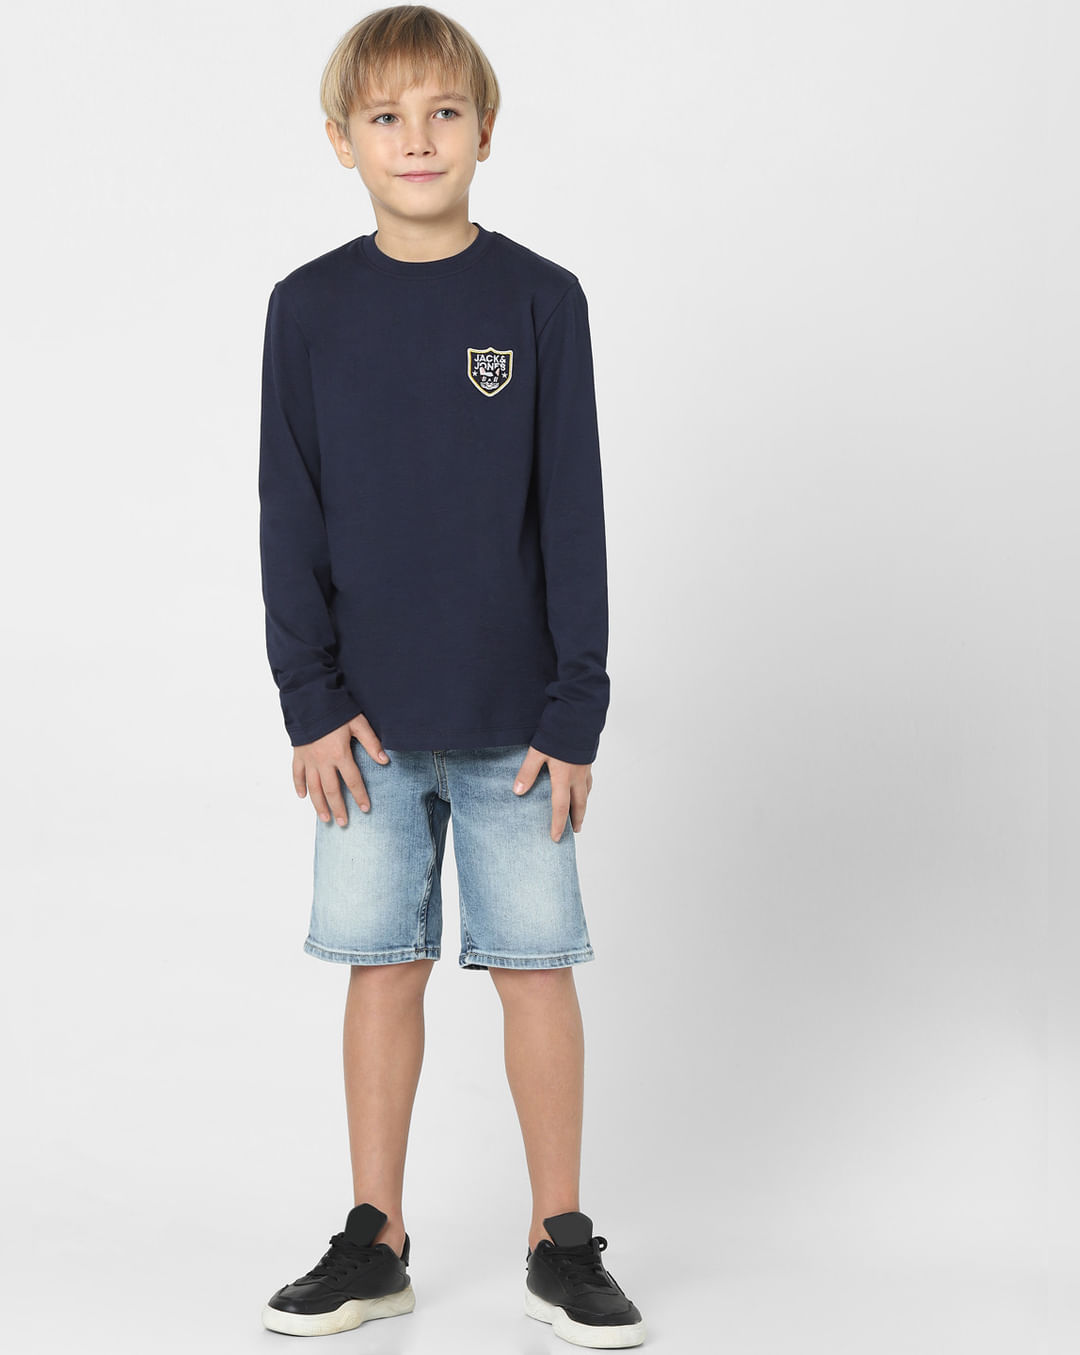 Buy Navy Blue Crew Neck T-shirt for Boys Online at Jack&Jones Junior ...